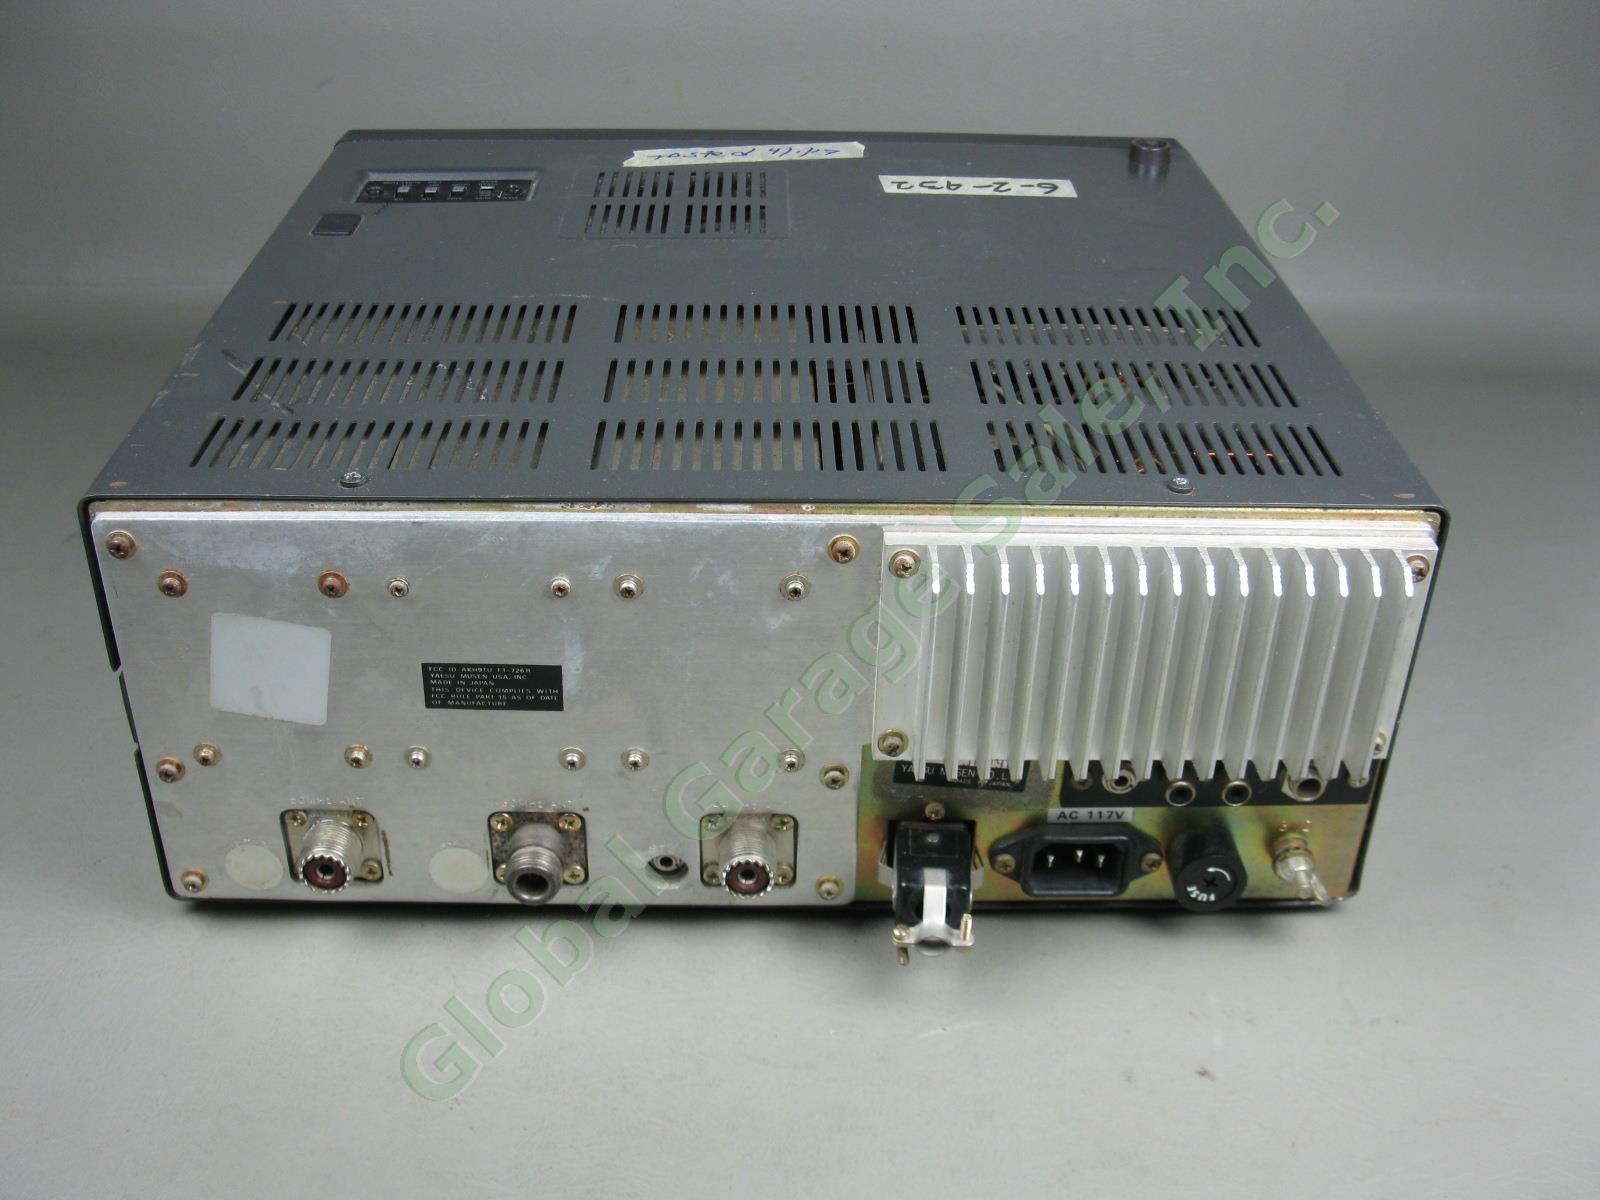 Yaesu FT-726R V/UHF All Mode Tribander Ham Radio Transceiver + YM-48 Mic Tested+ 6